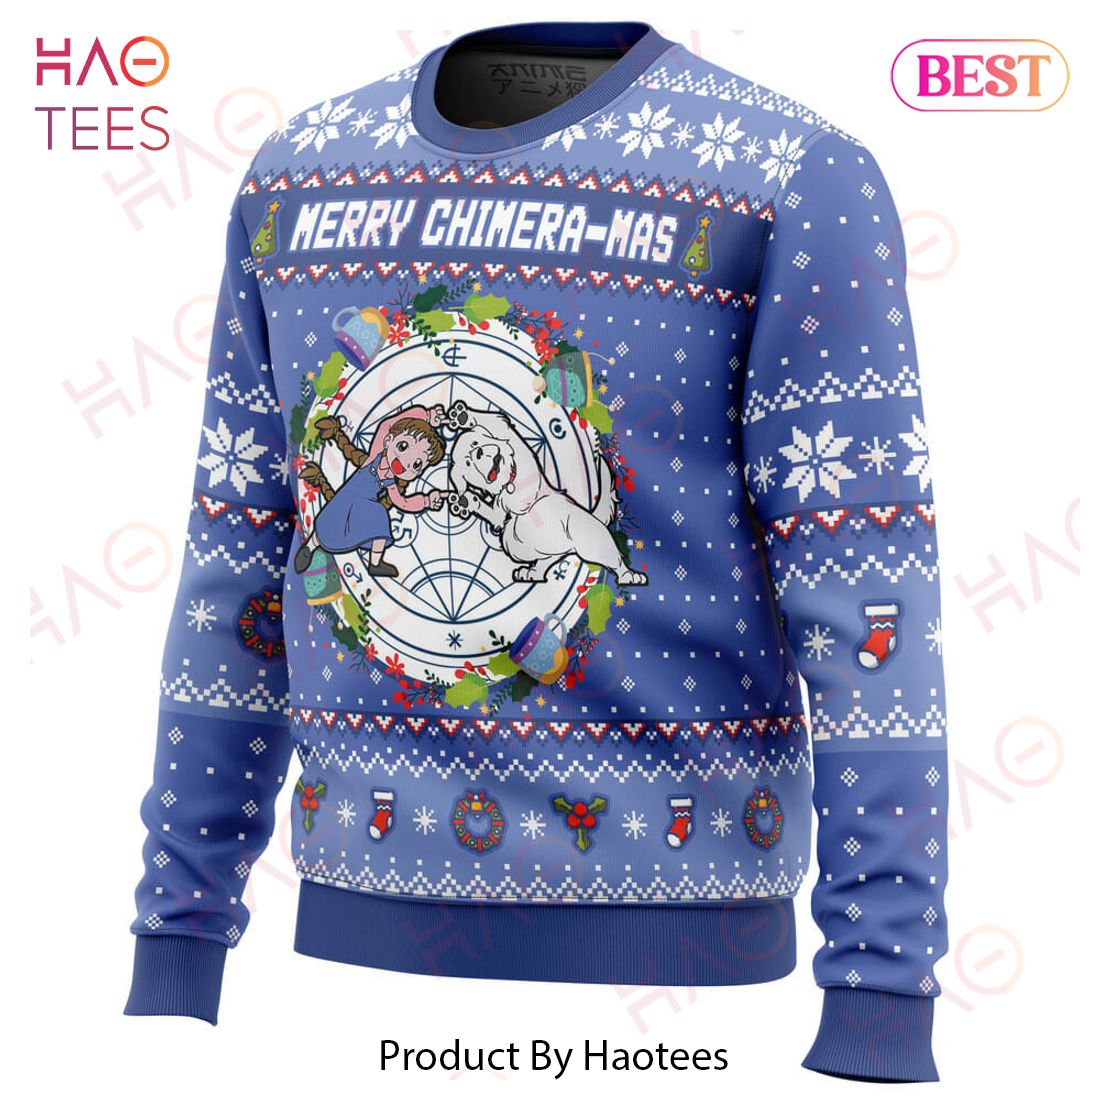 Merry Chimera-mas Fullmetal Alchemist Christmas Sweater